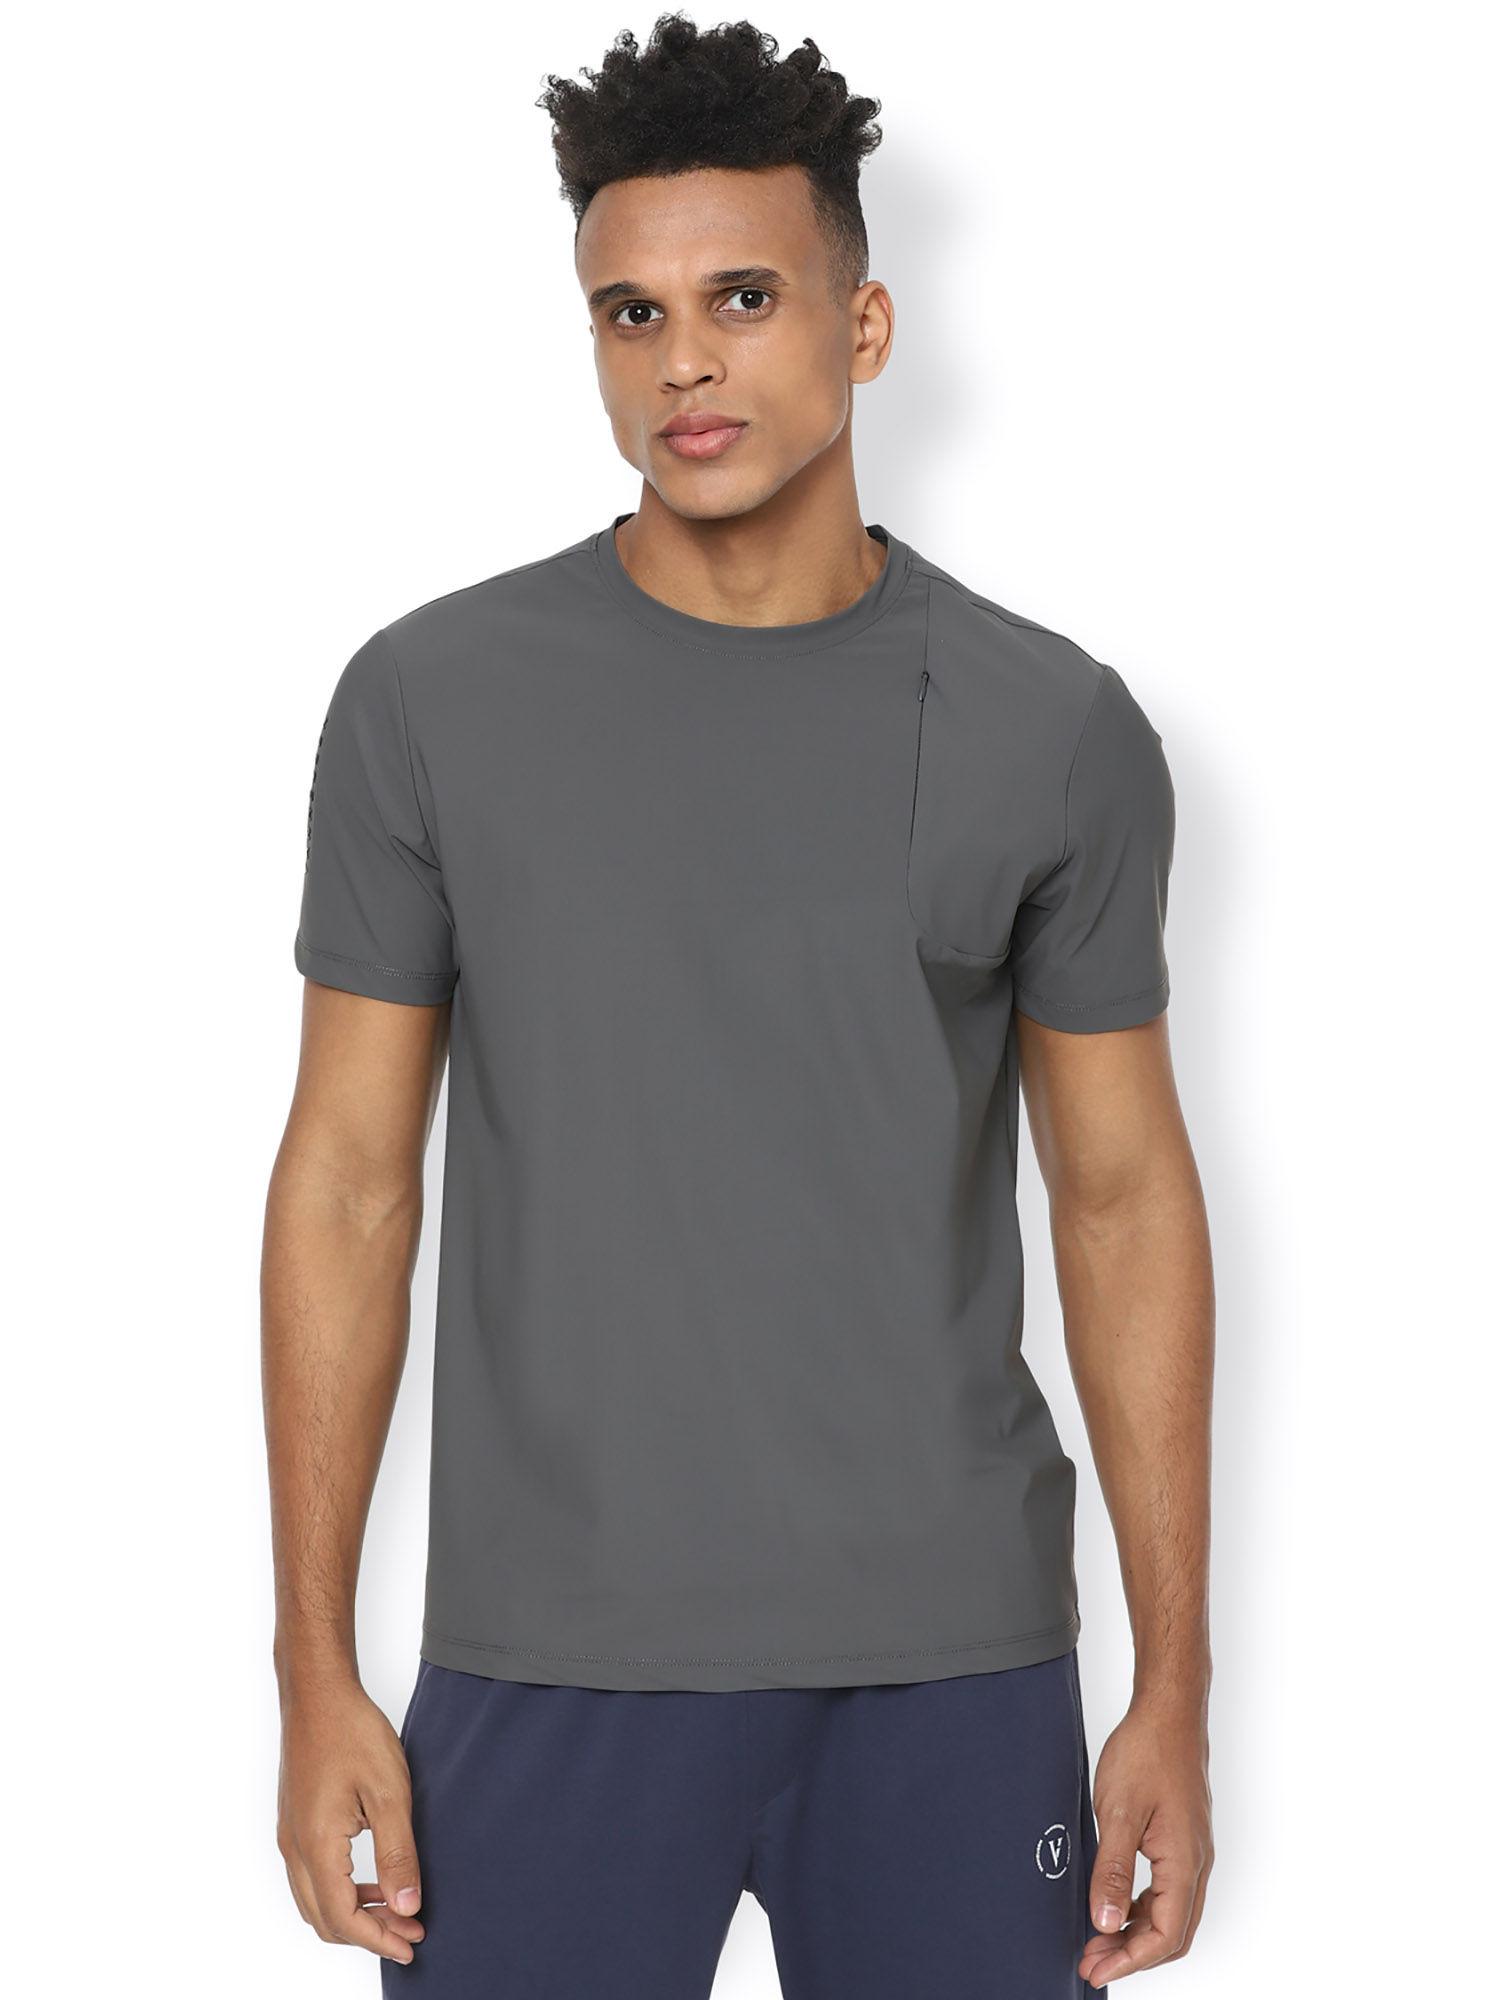 grey-t-shirt